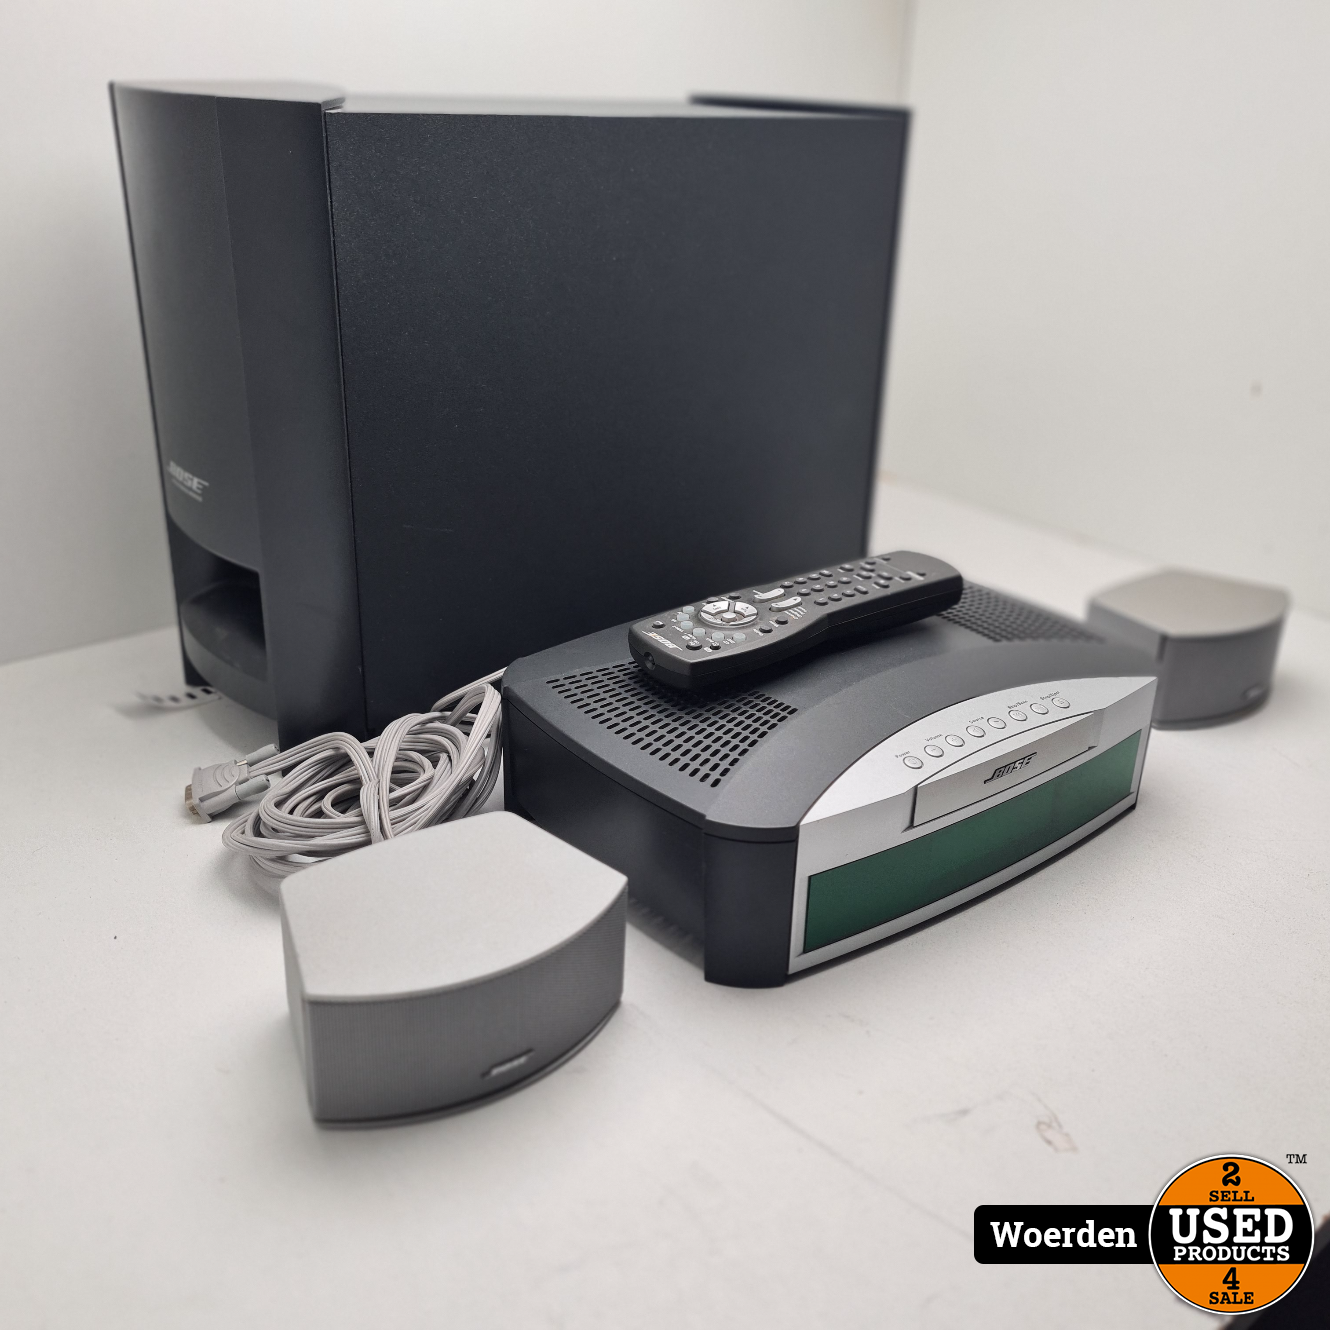 karbonade erven dubbellaag Bose 3 2 1GS Speaker Audio Systeem met Garantie - Used Products Woerden